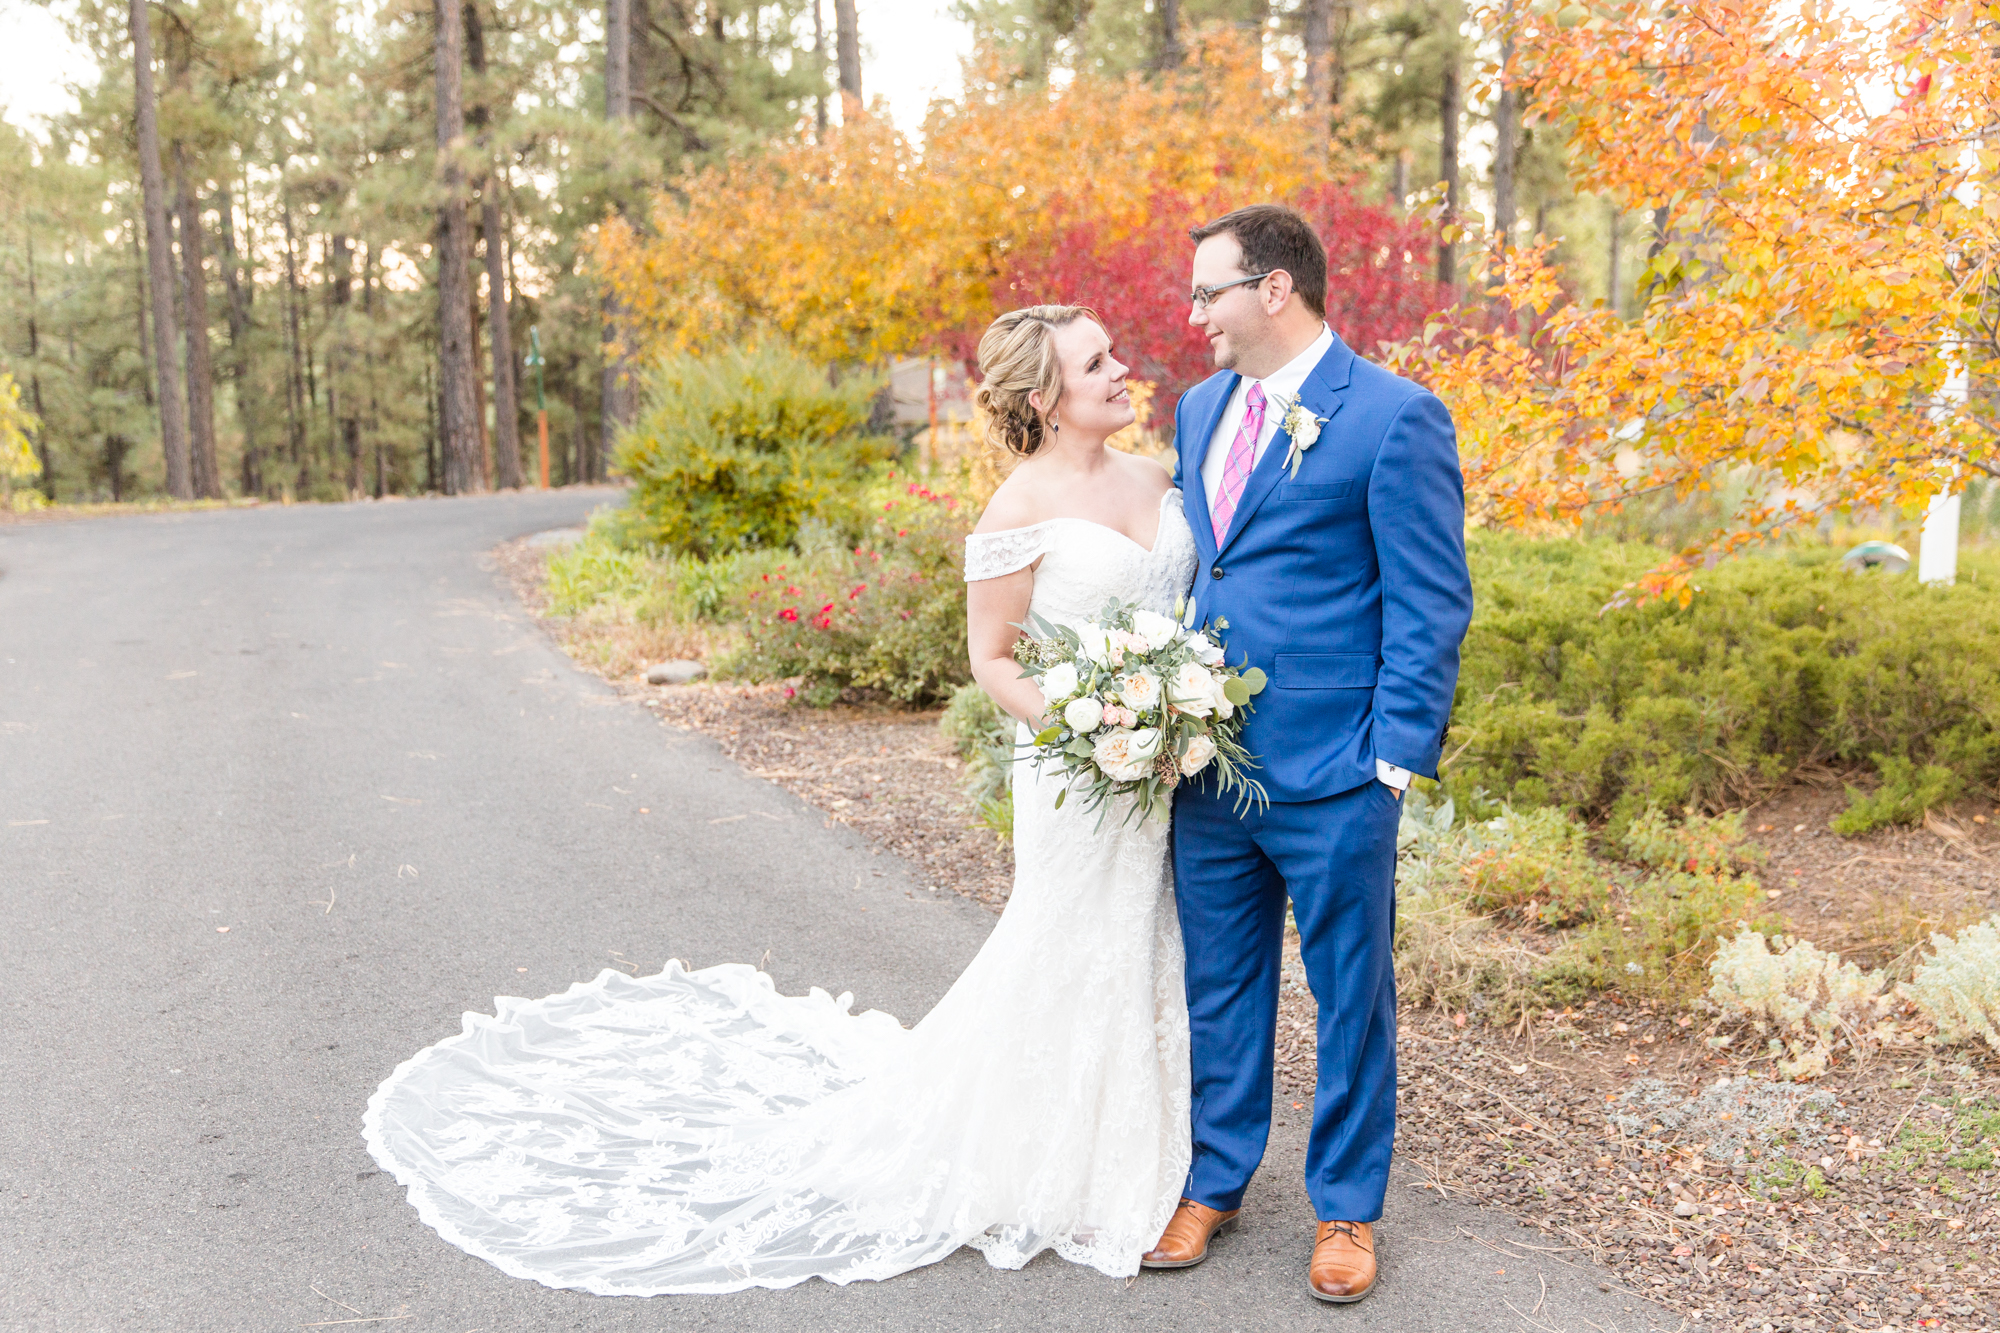 Forest Highlands Flagstaff wedding photography by Brooke & Doug